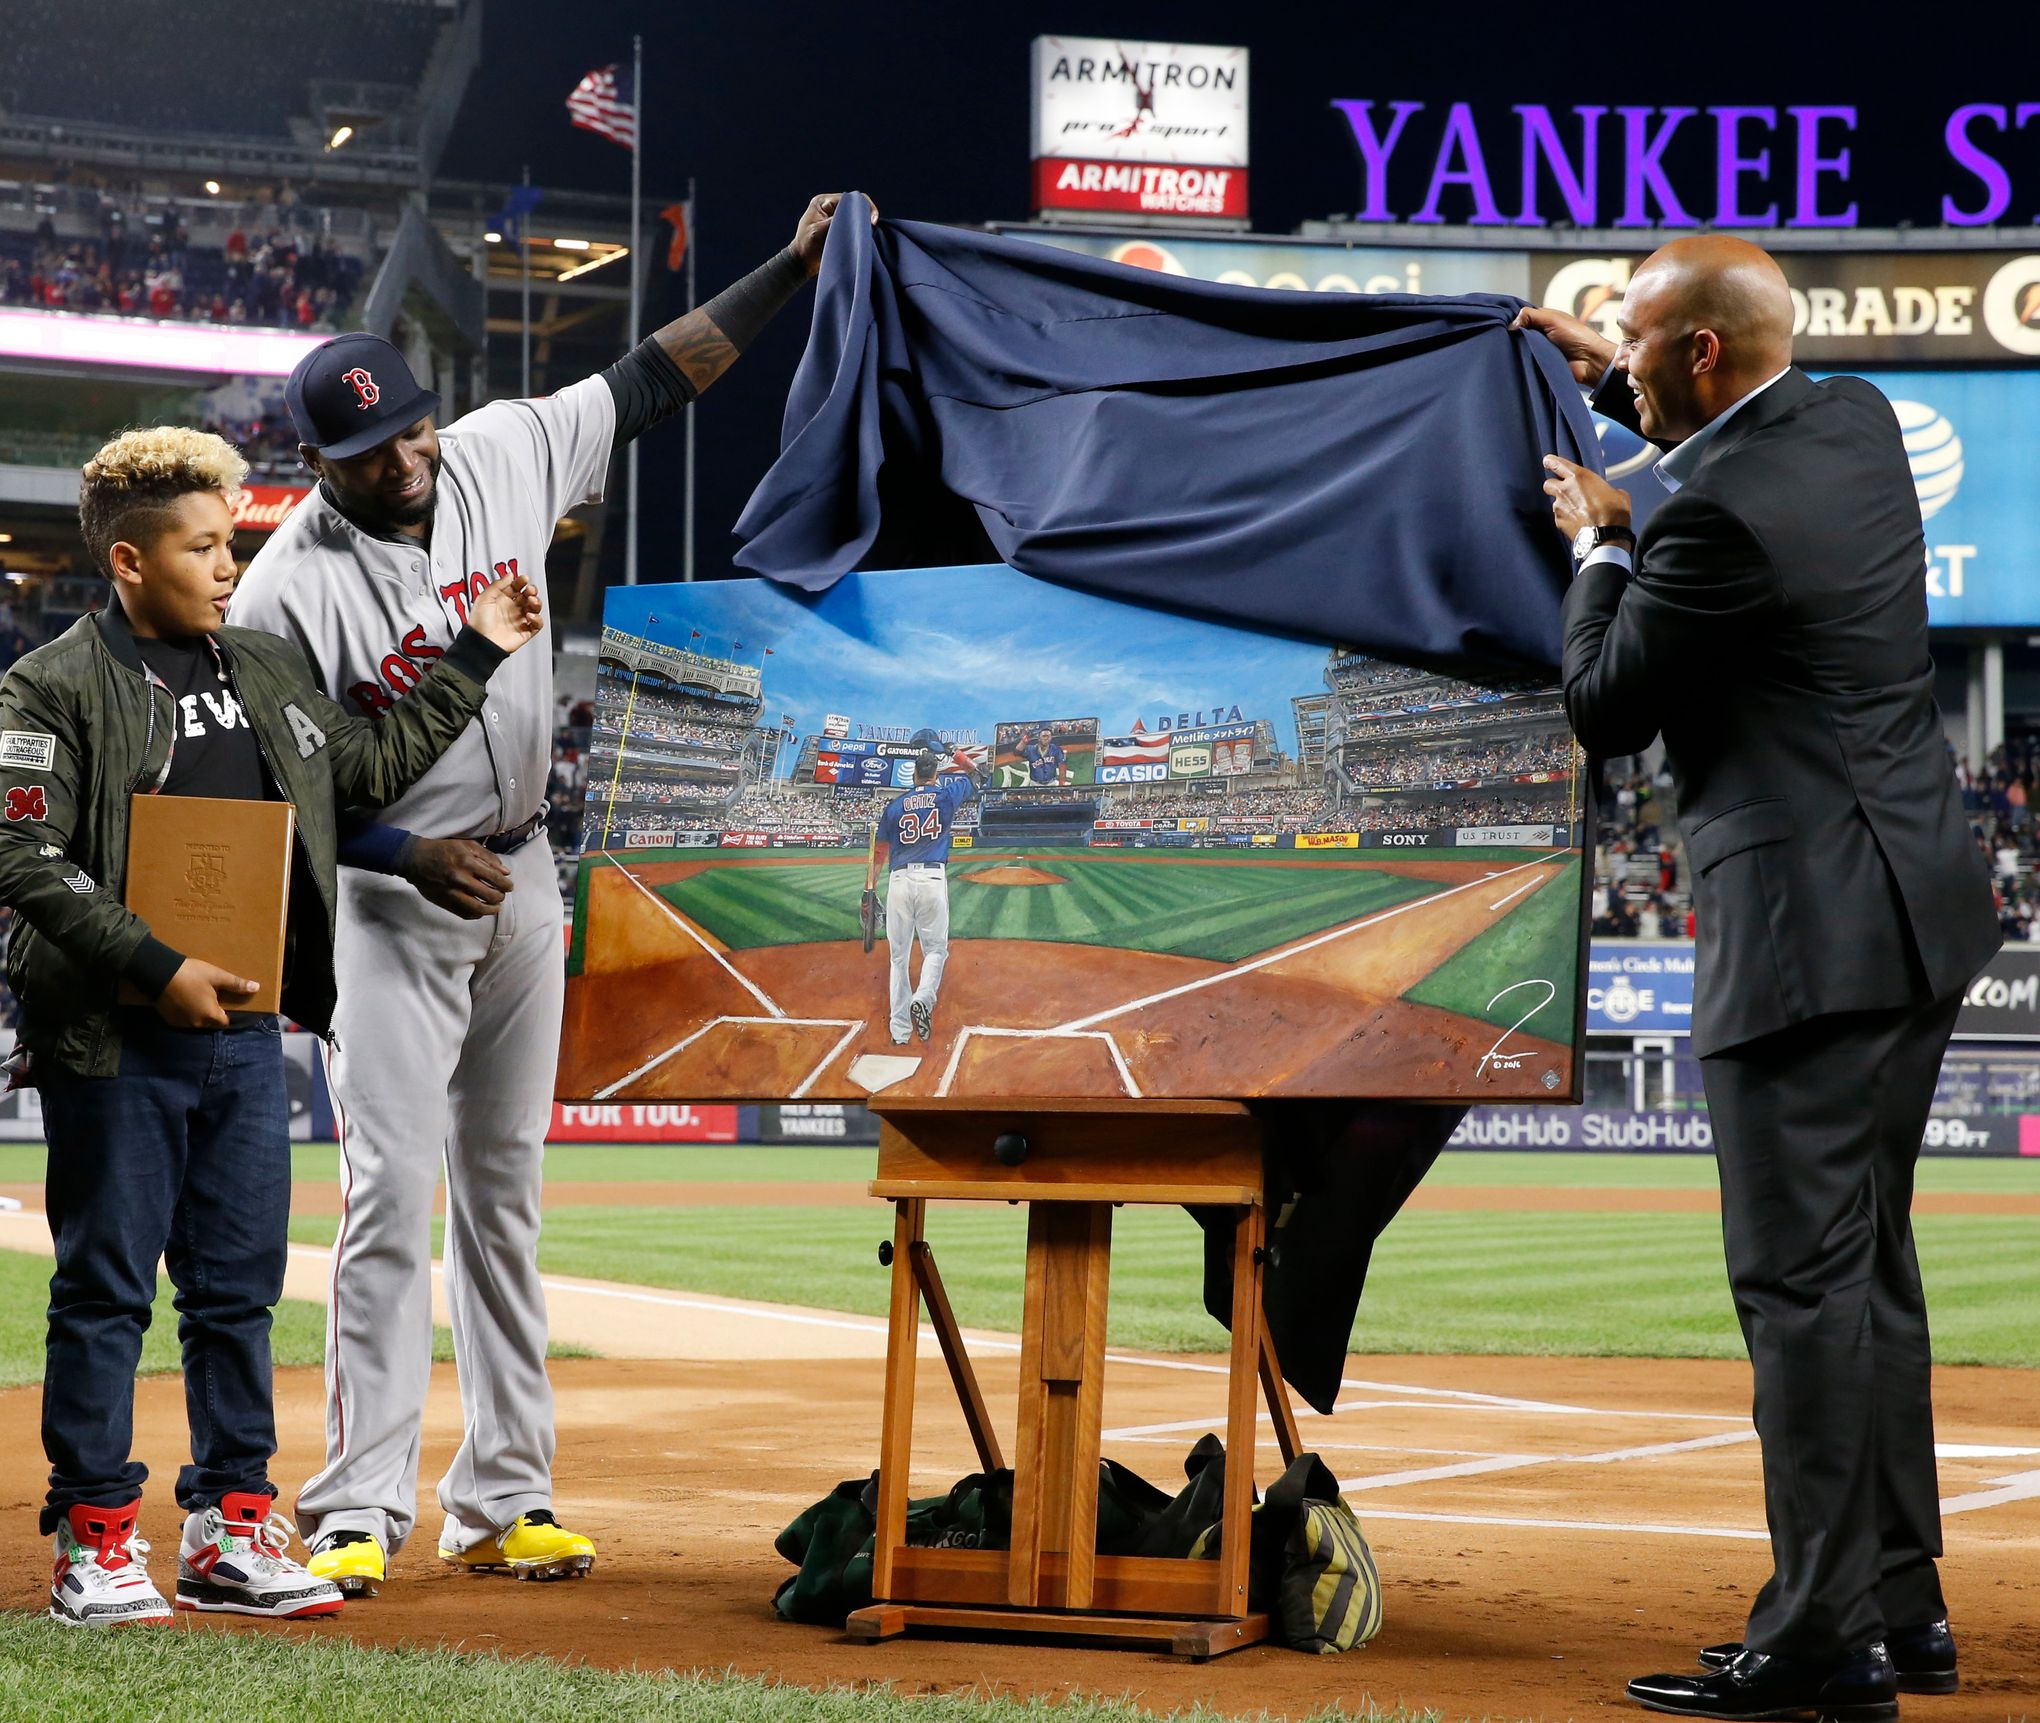 David Ortiz given standing ovation in Yankee Stadium finale